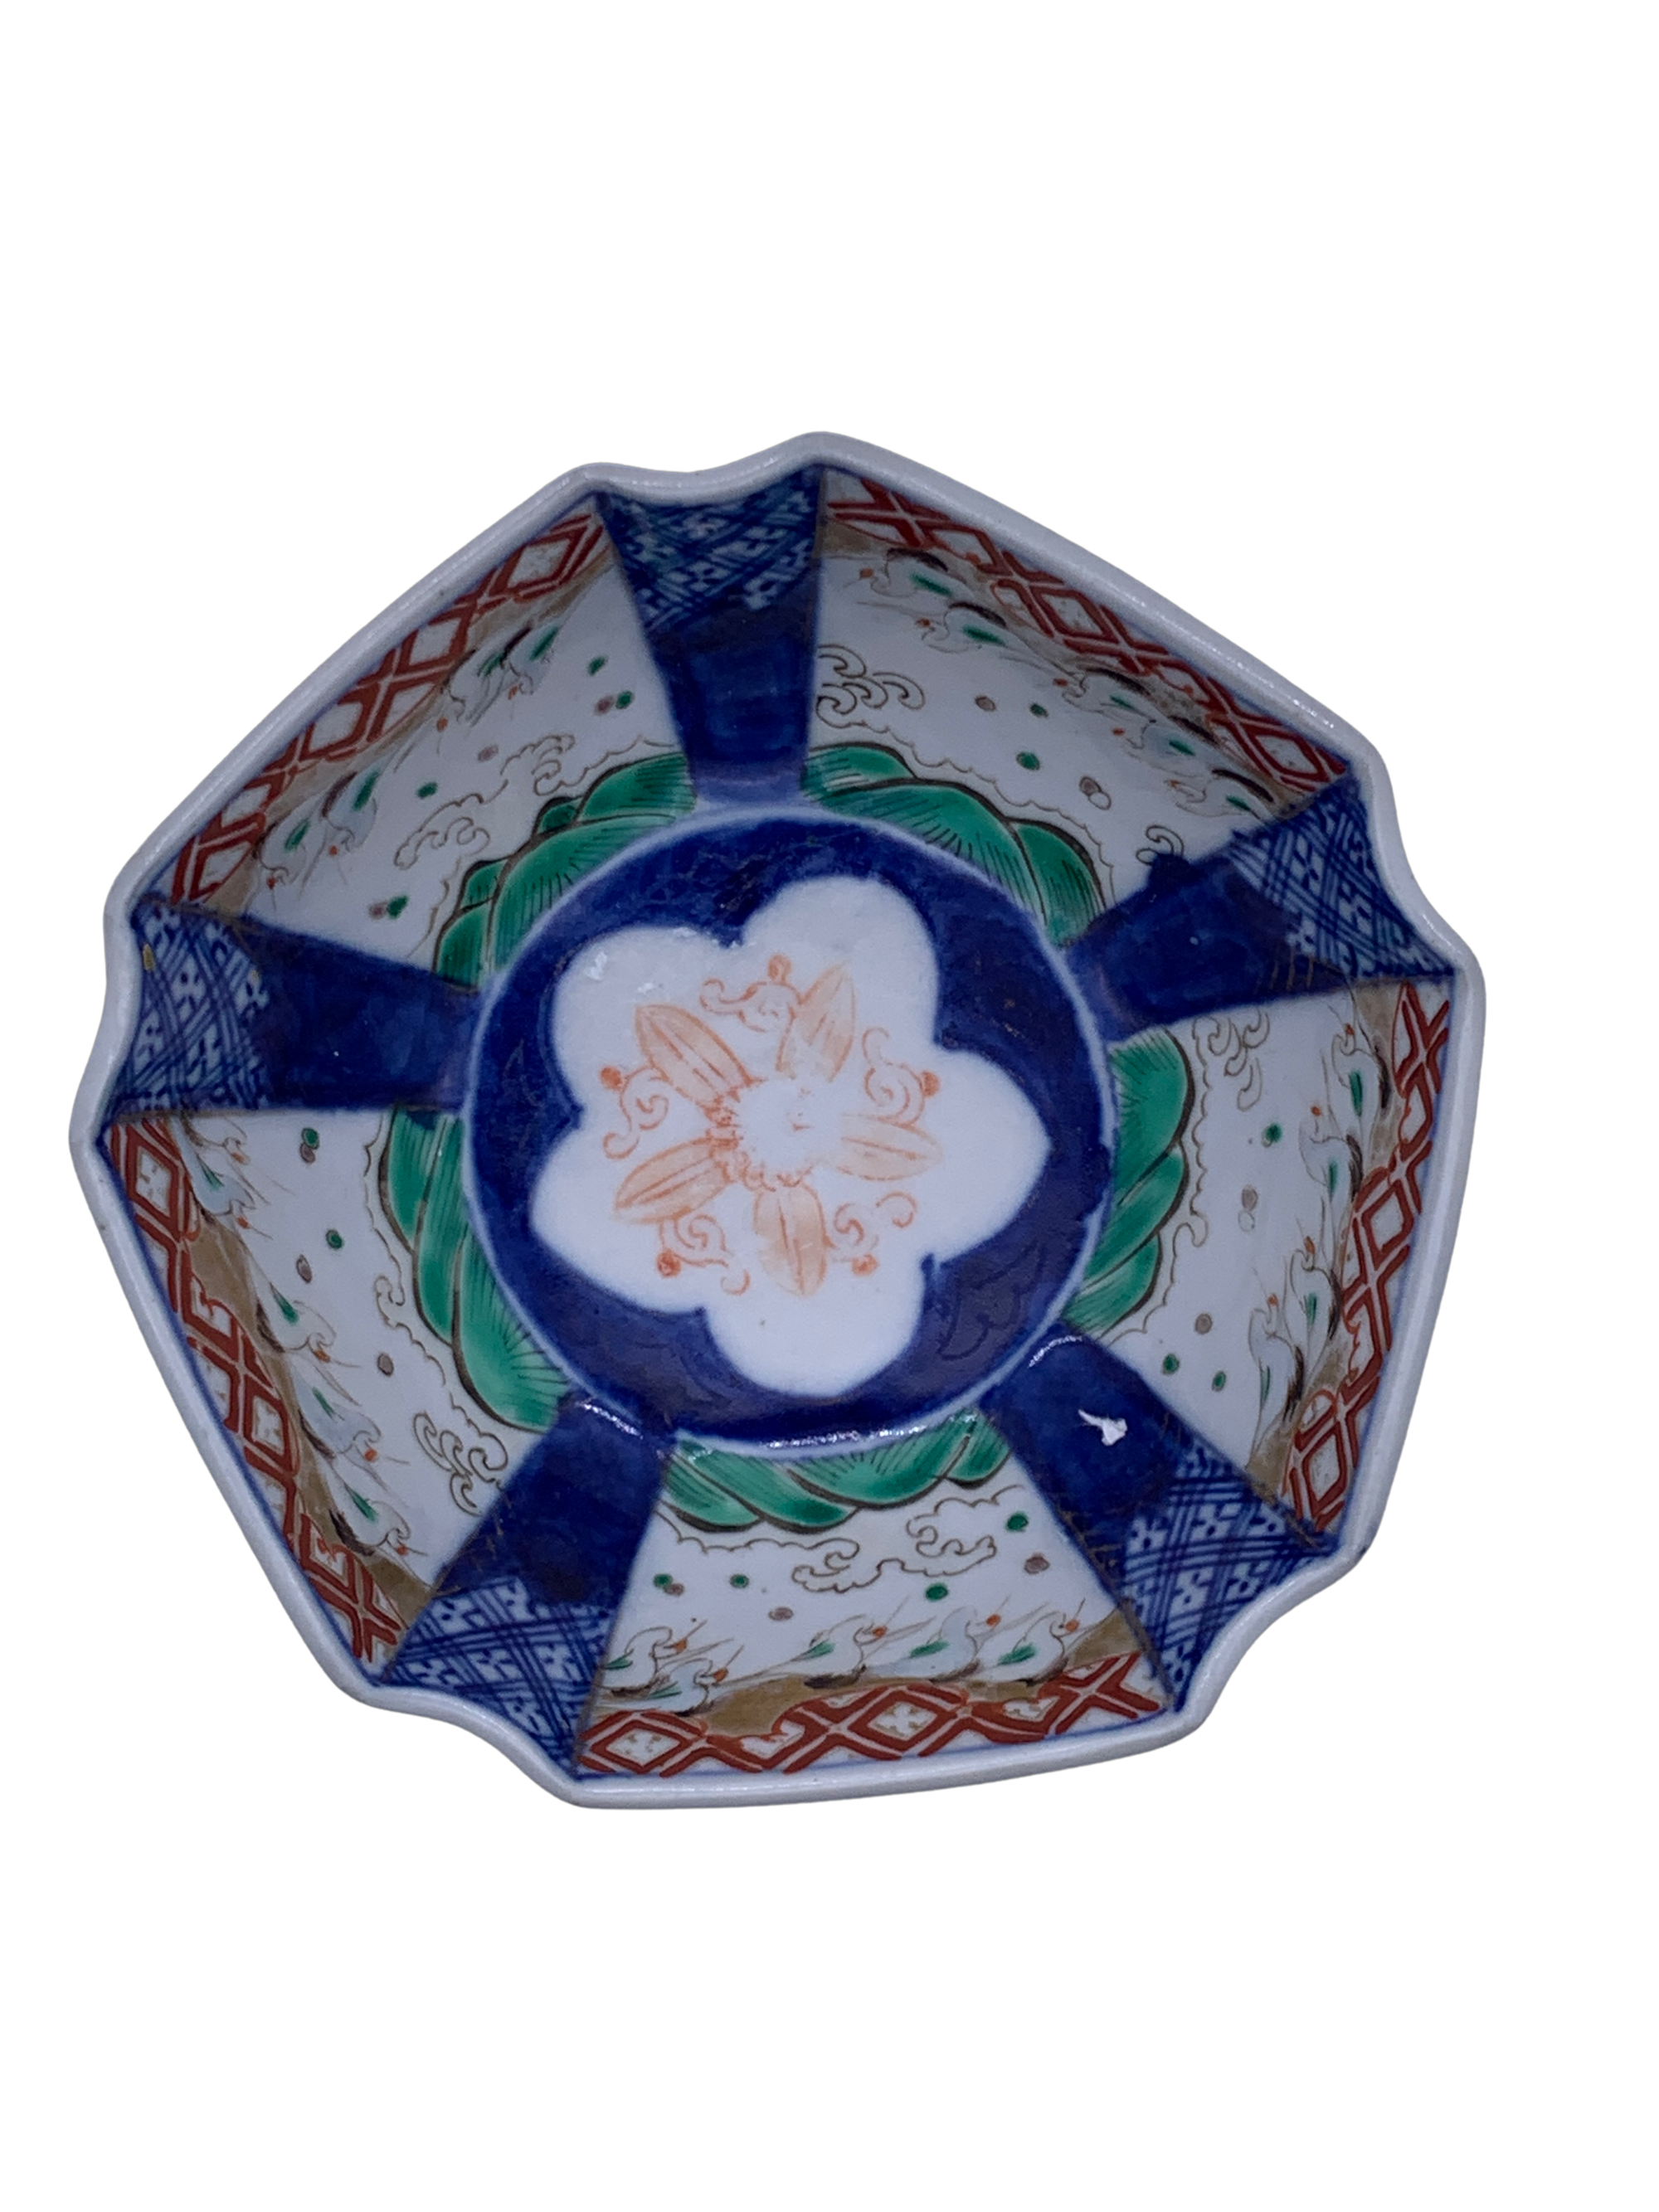 Vintage Imari Bowl - Hunt and Bloom